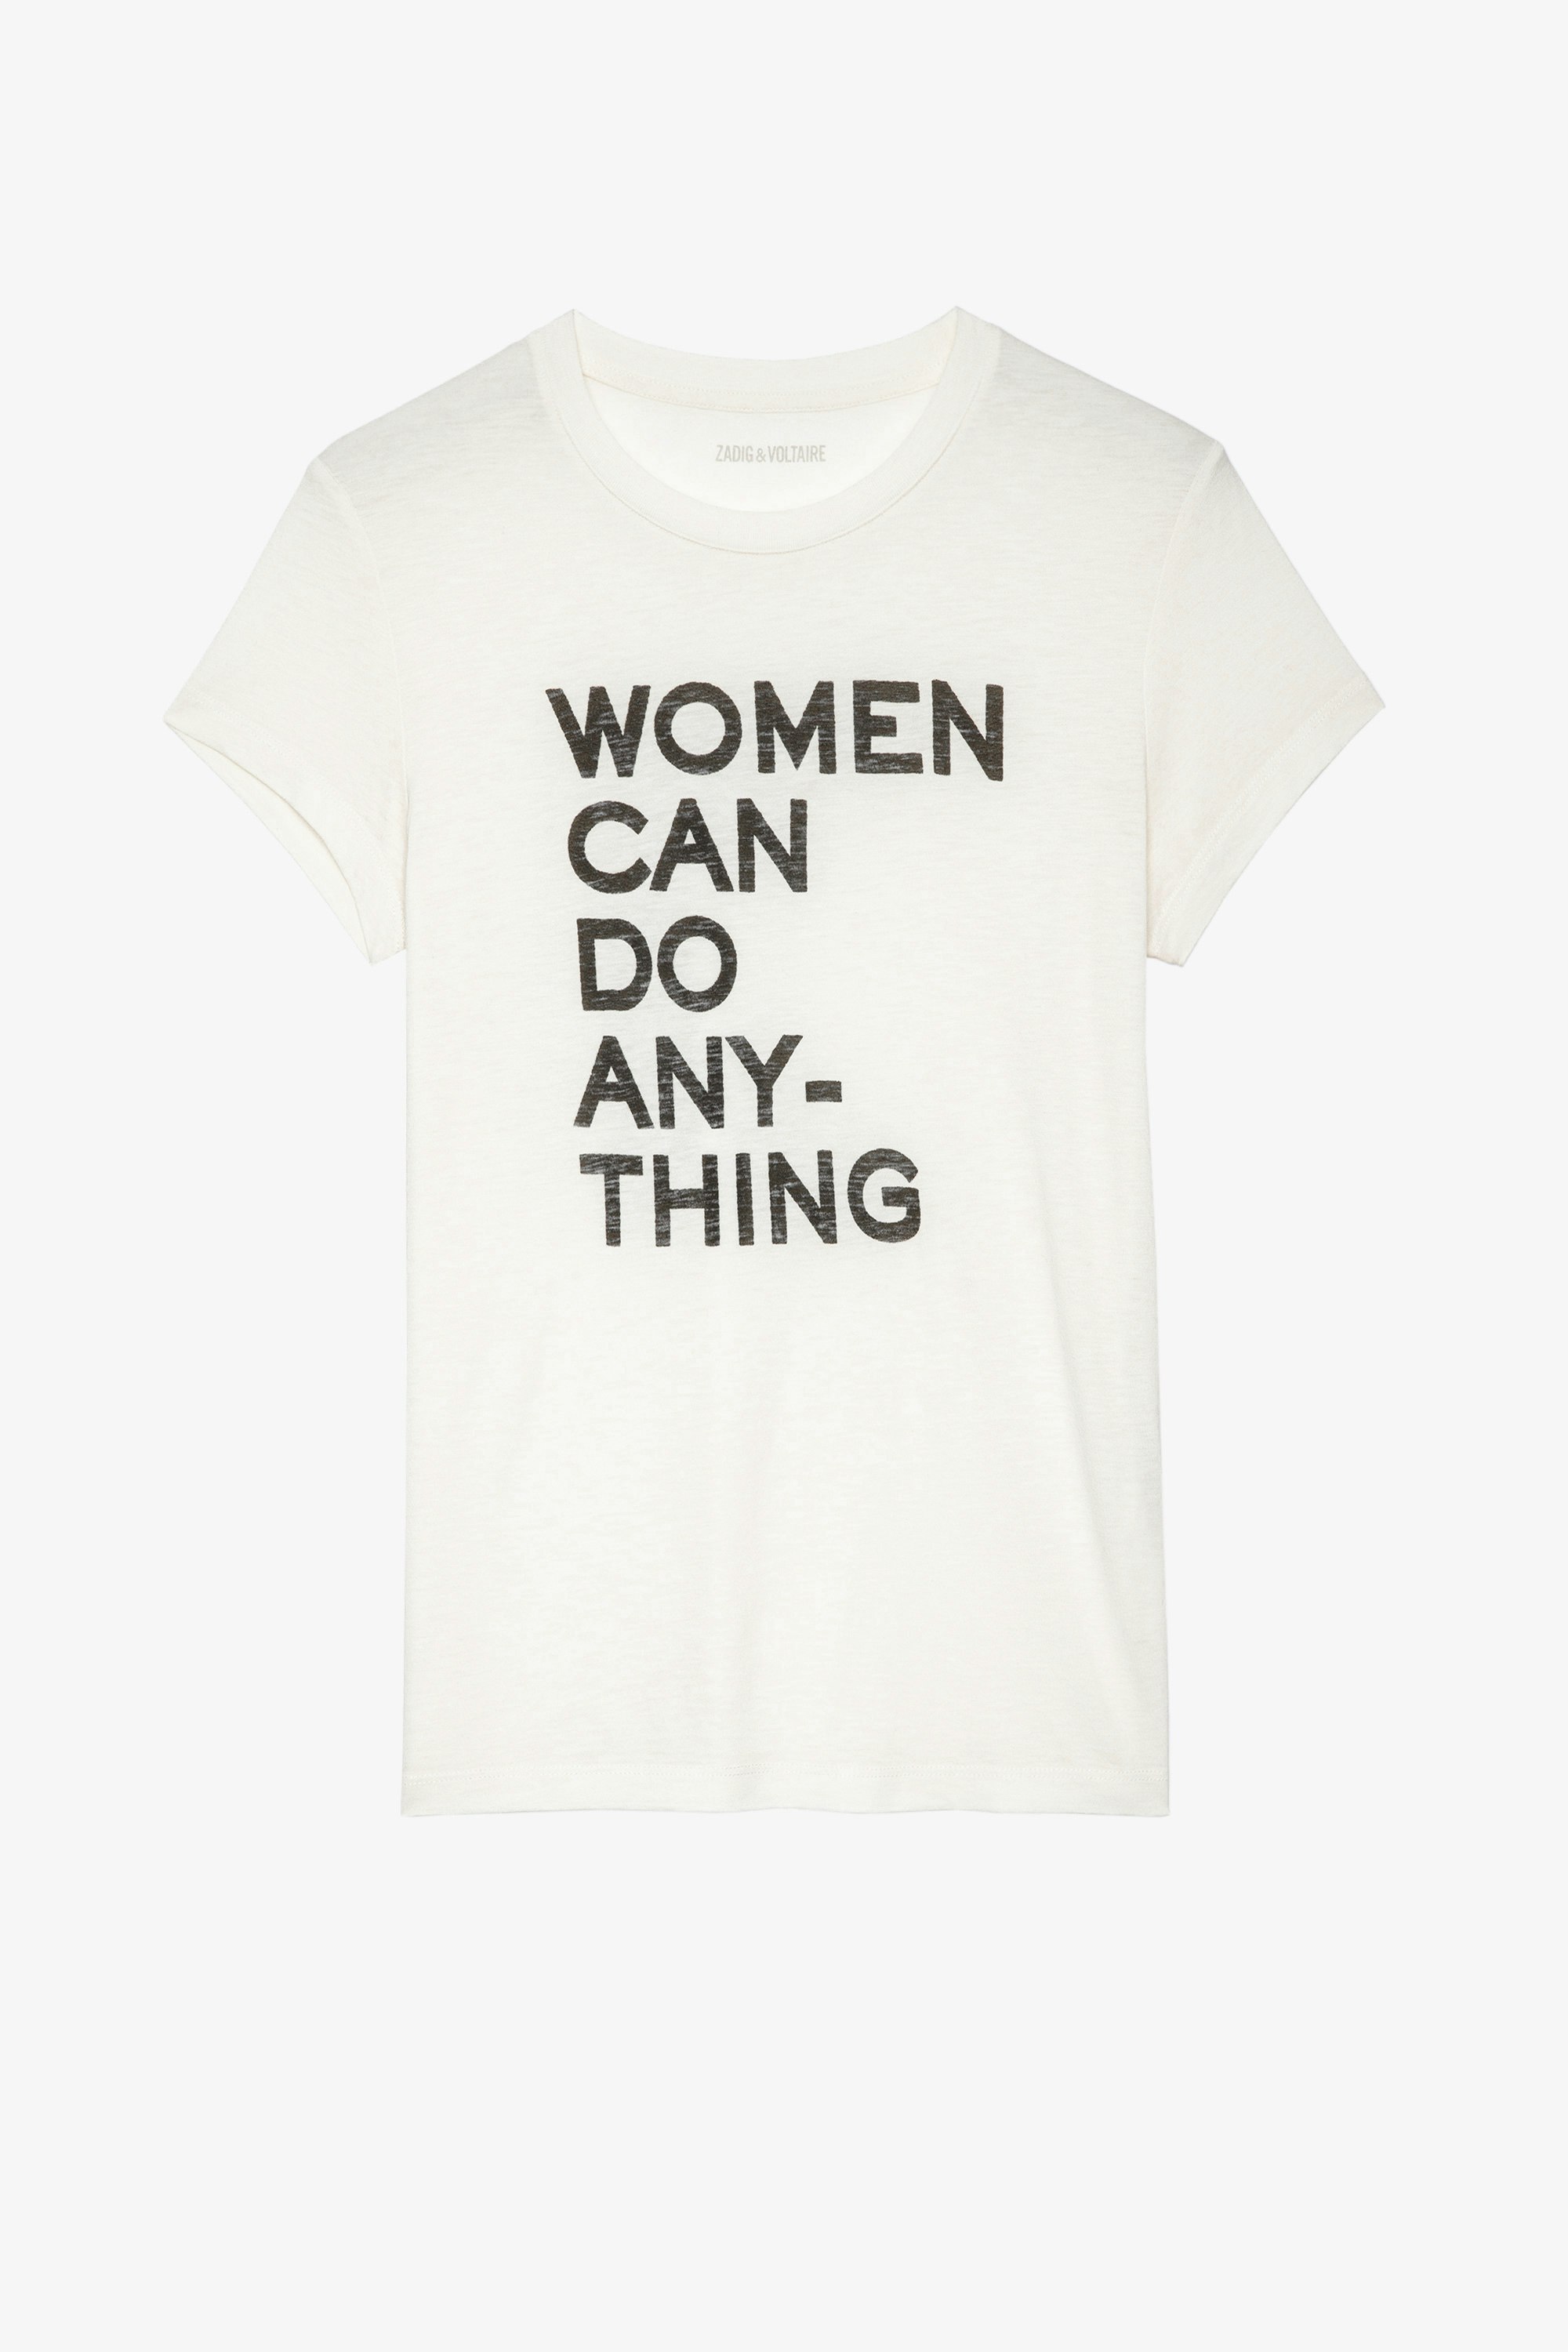 Walk Women can do anything T-shirt Women's beige cotton T-shirt with 'Women can do anything' slogan